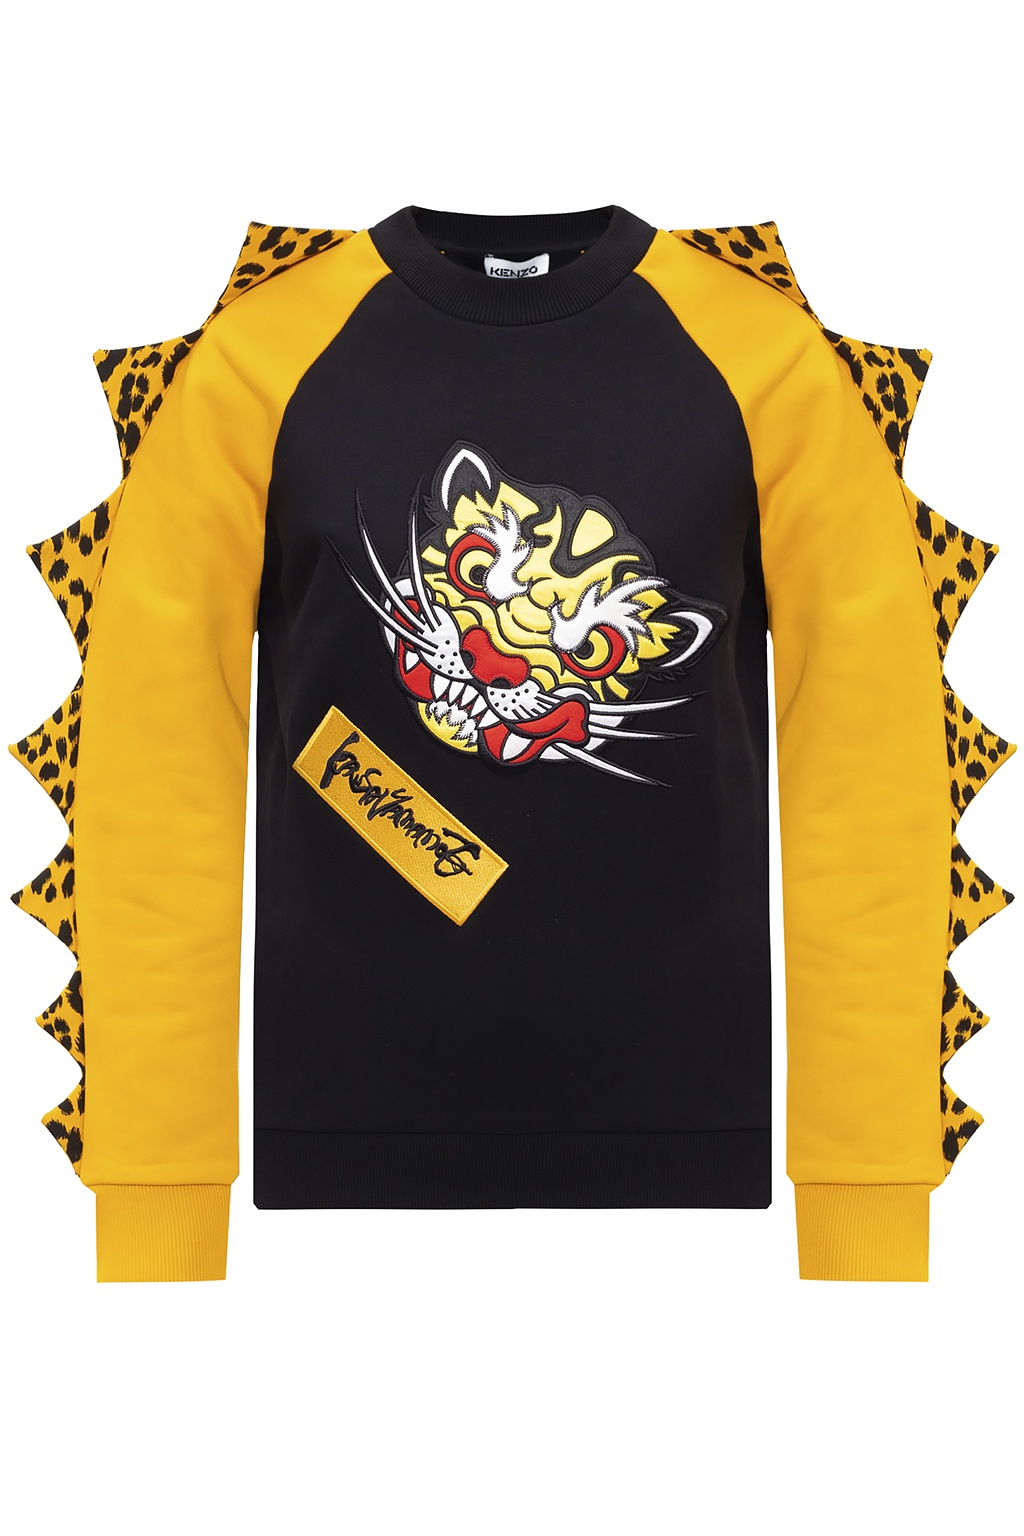 Kenzo x Kansai Yamamoto Cheetah Print Sweatshirt - Farfetch